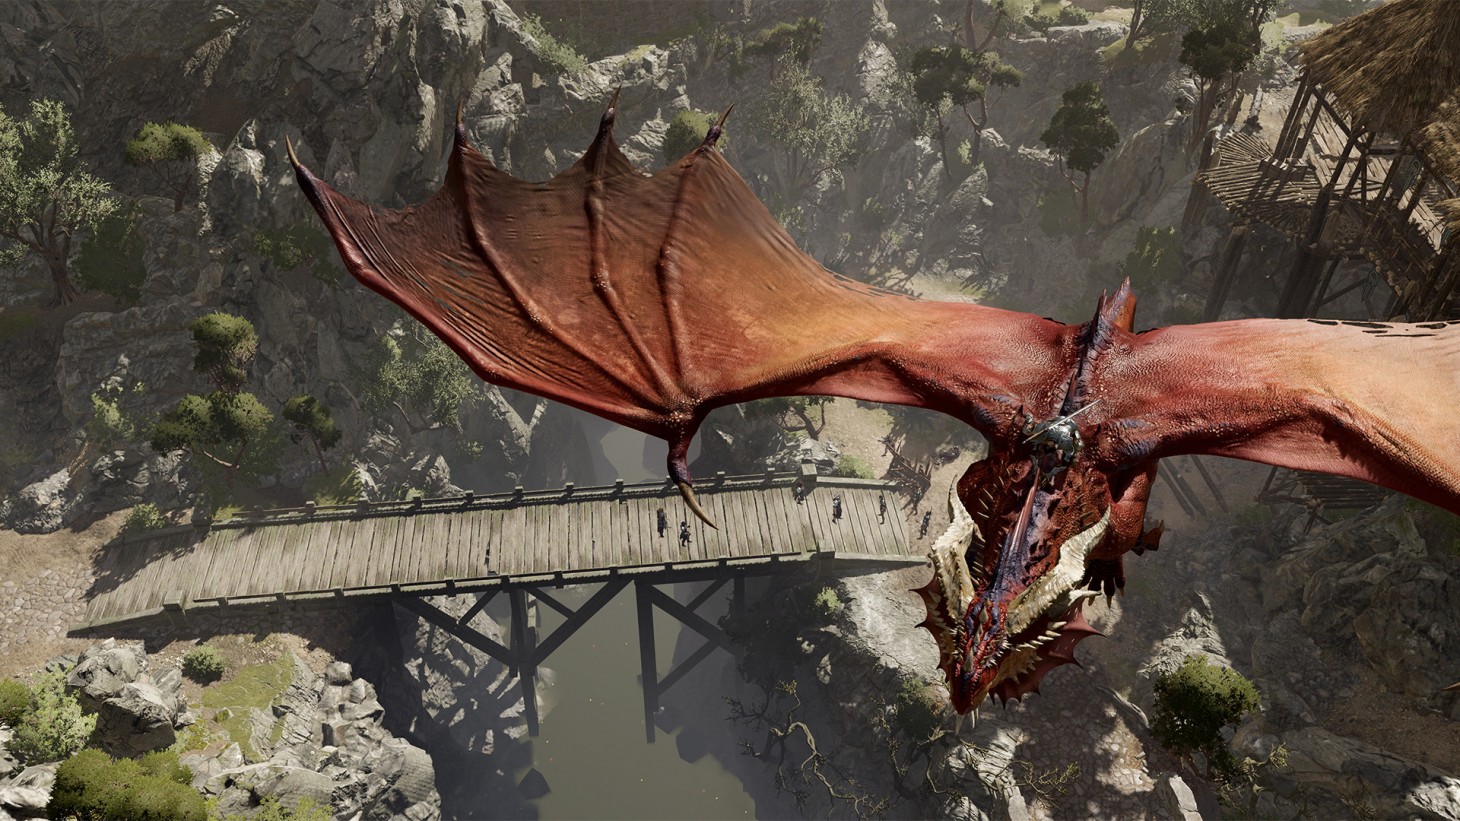 indvirkning trofast følelse Check Out The Baldur's Gate 3 Early Access Launch Trailer - Game Informer